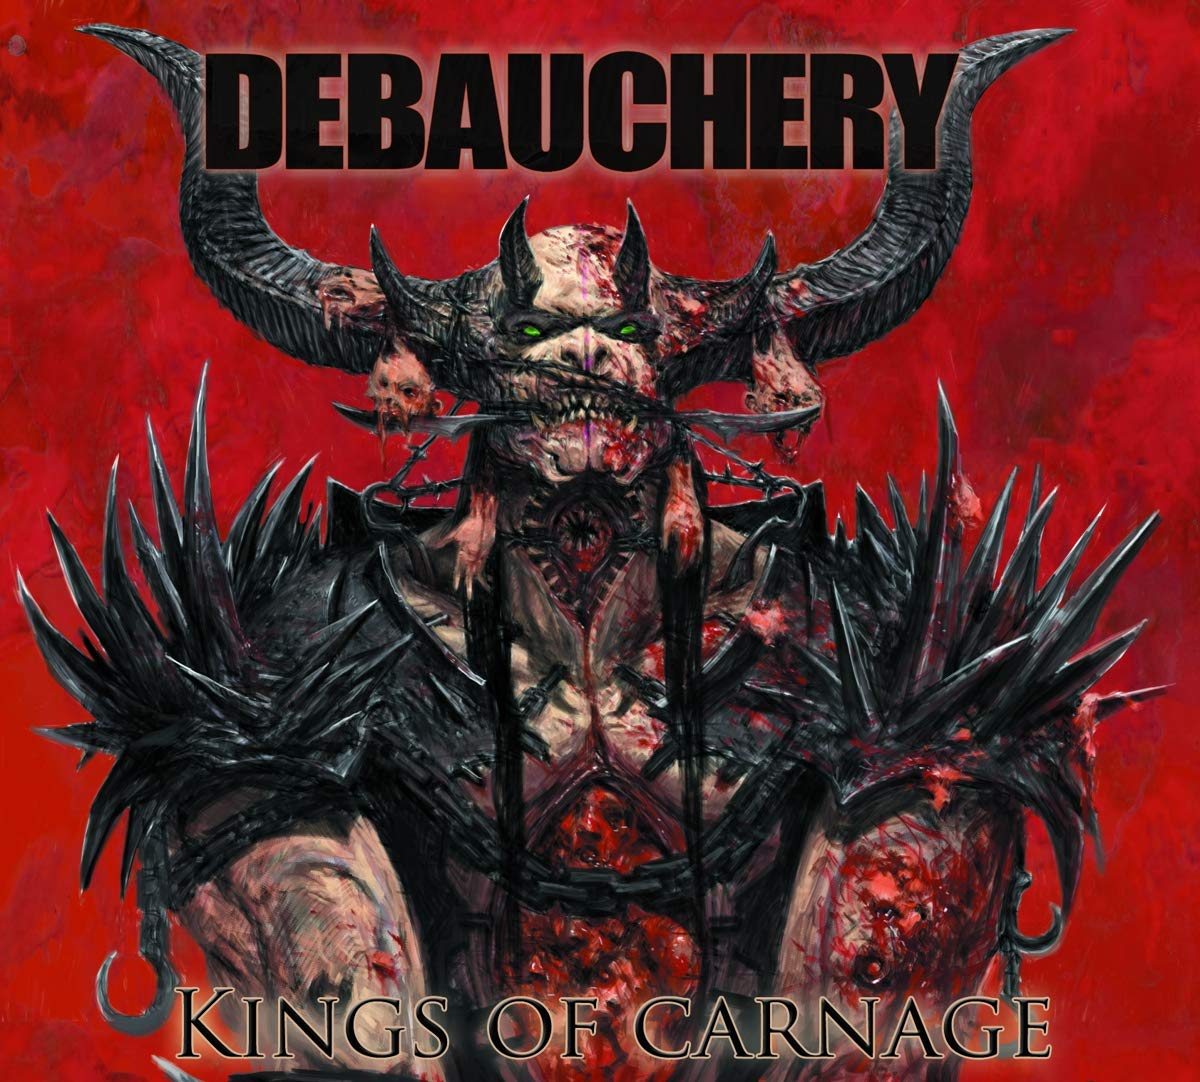 DEBAUCHERY - Blood For The Blood God